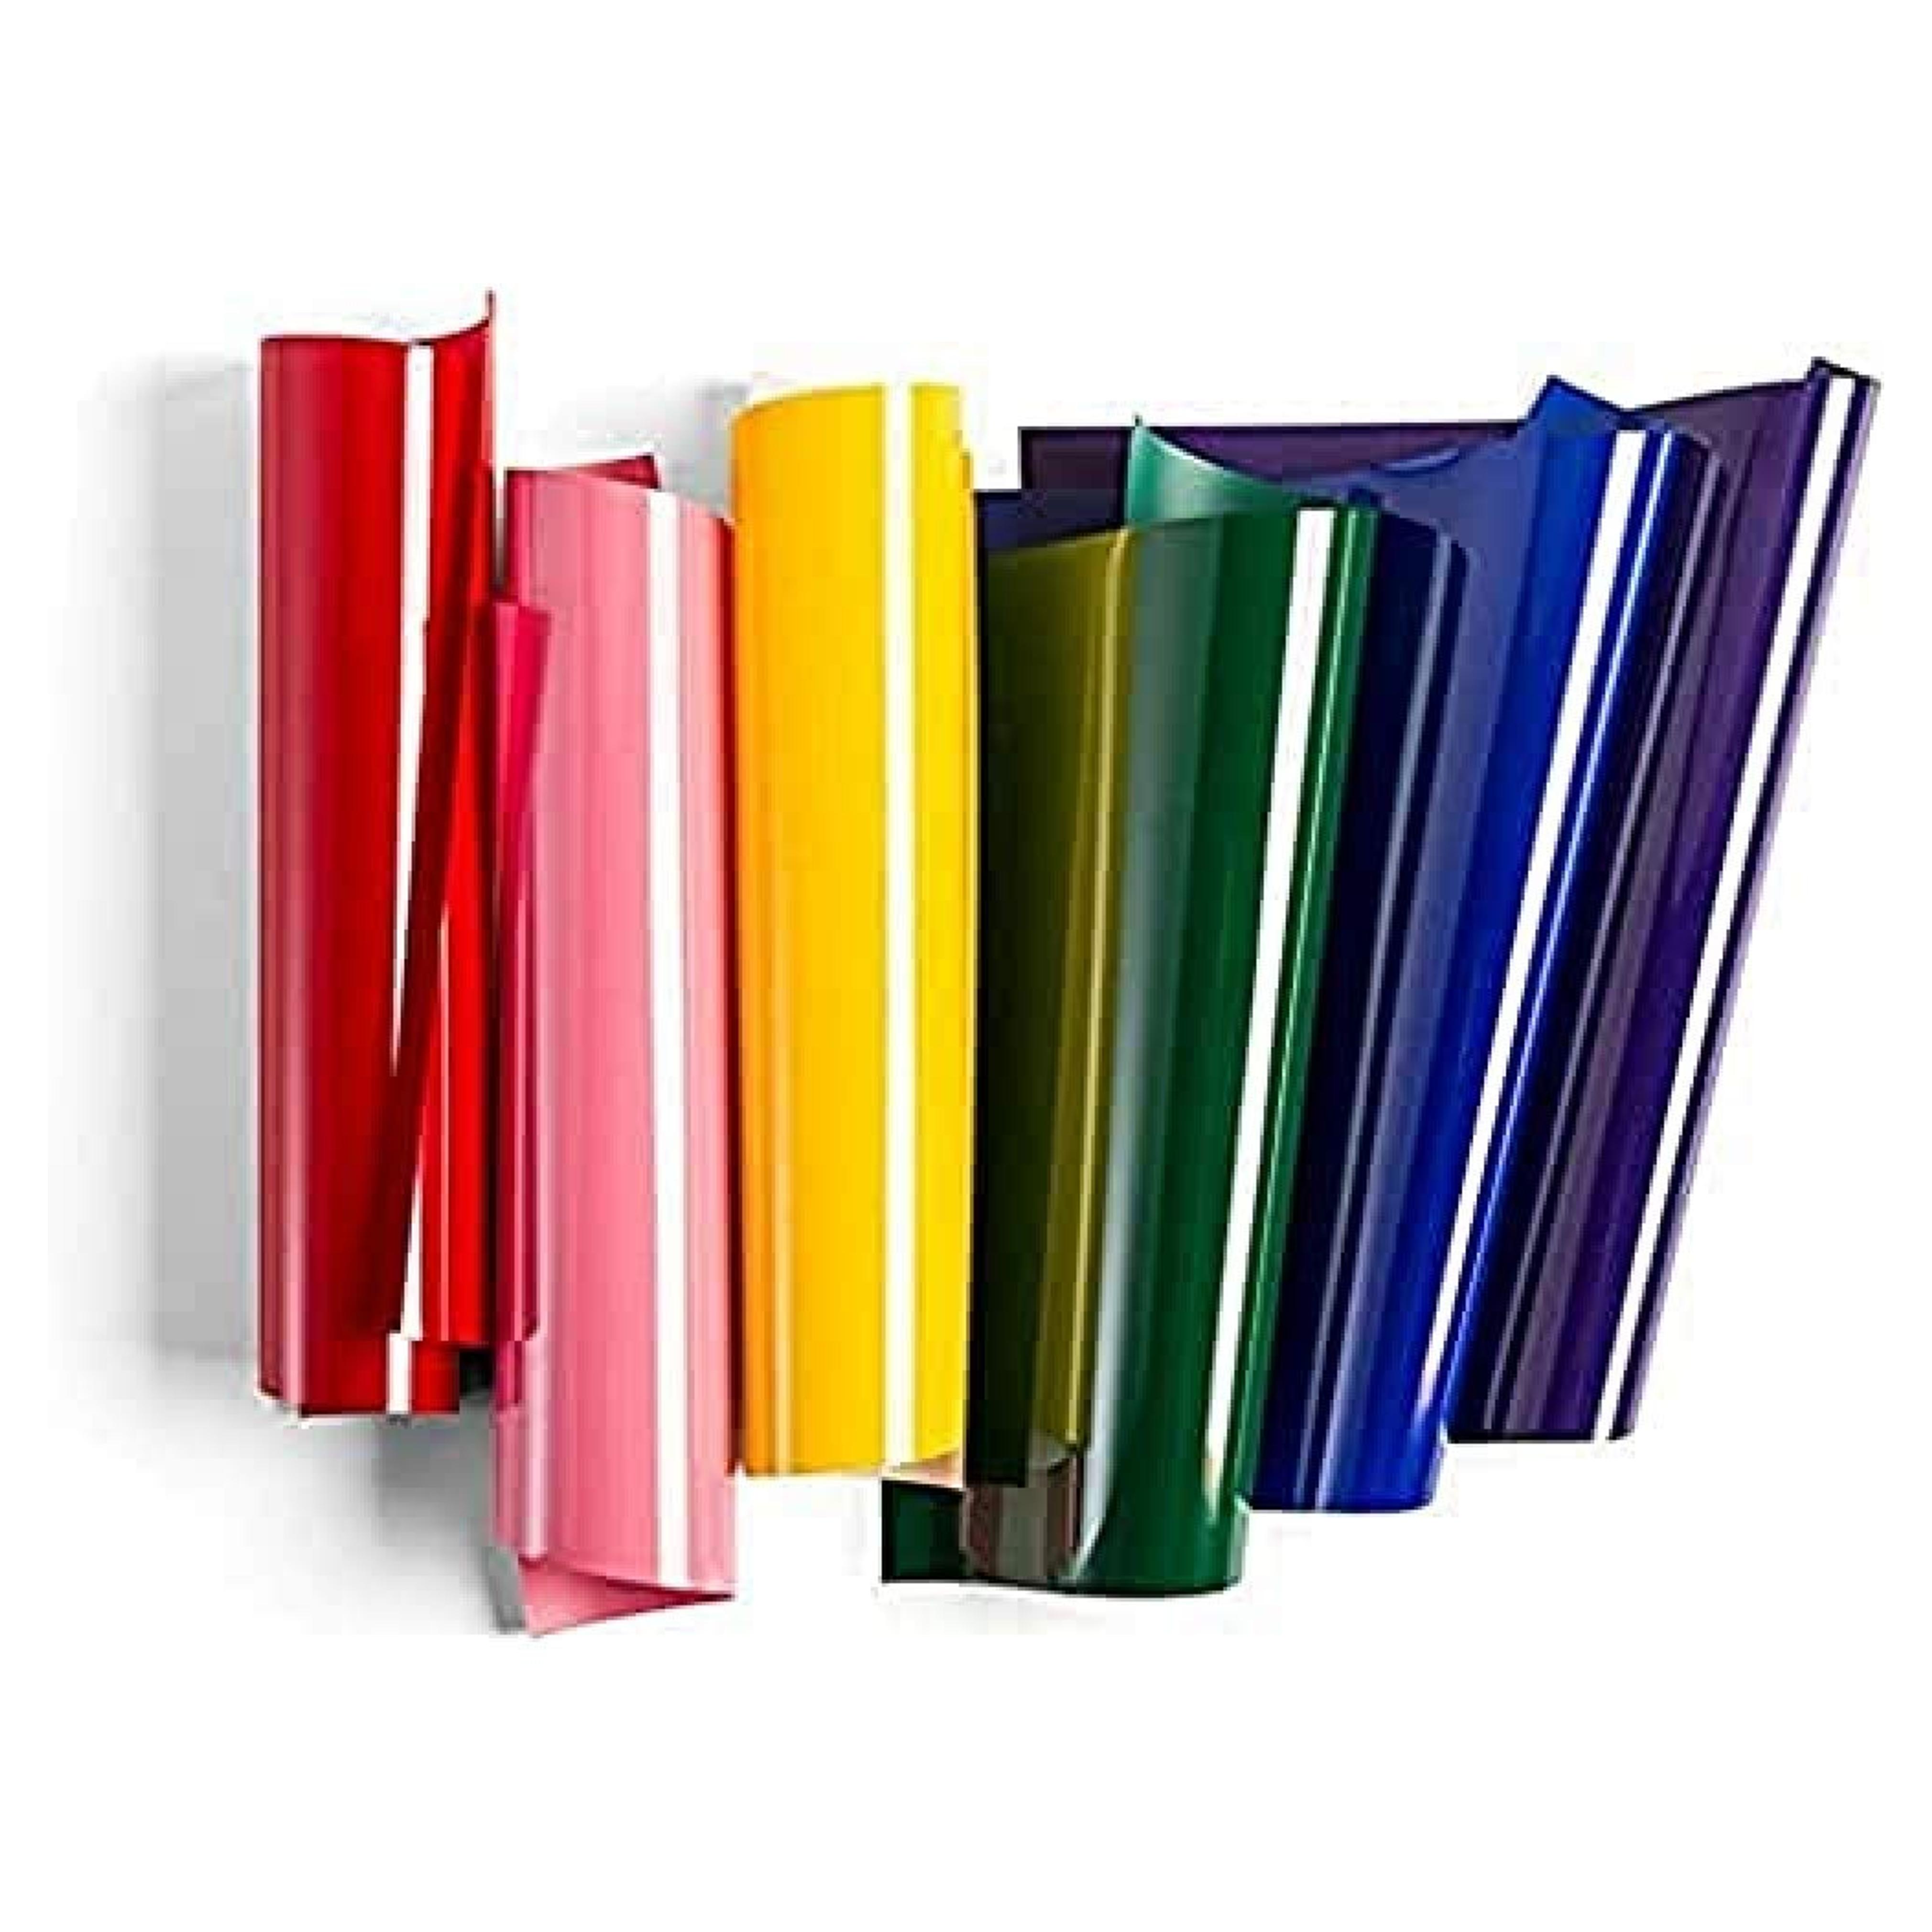 Cricut Iron On | Rainbow | 30.5cm x 30.5cm (12" x 12") | 6 x Heat Transfer Vinyl Sheets (HTV) | For use with all Cricut Cutting Machines